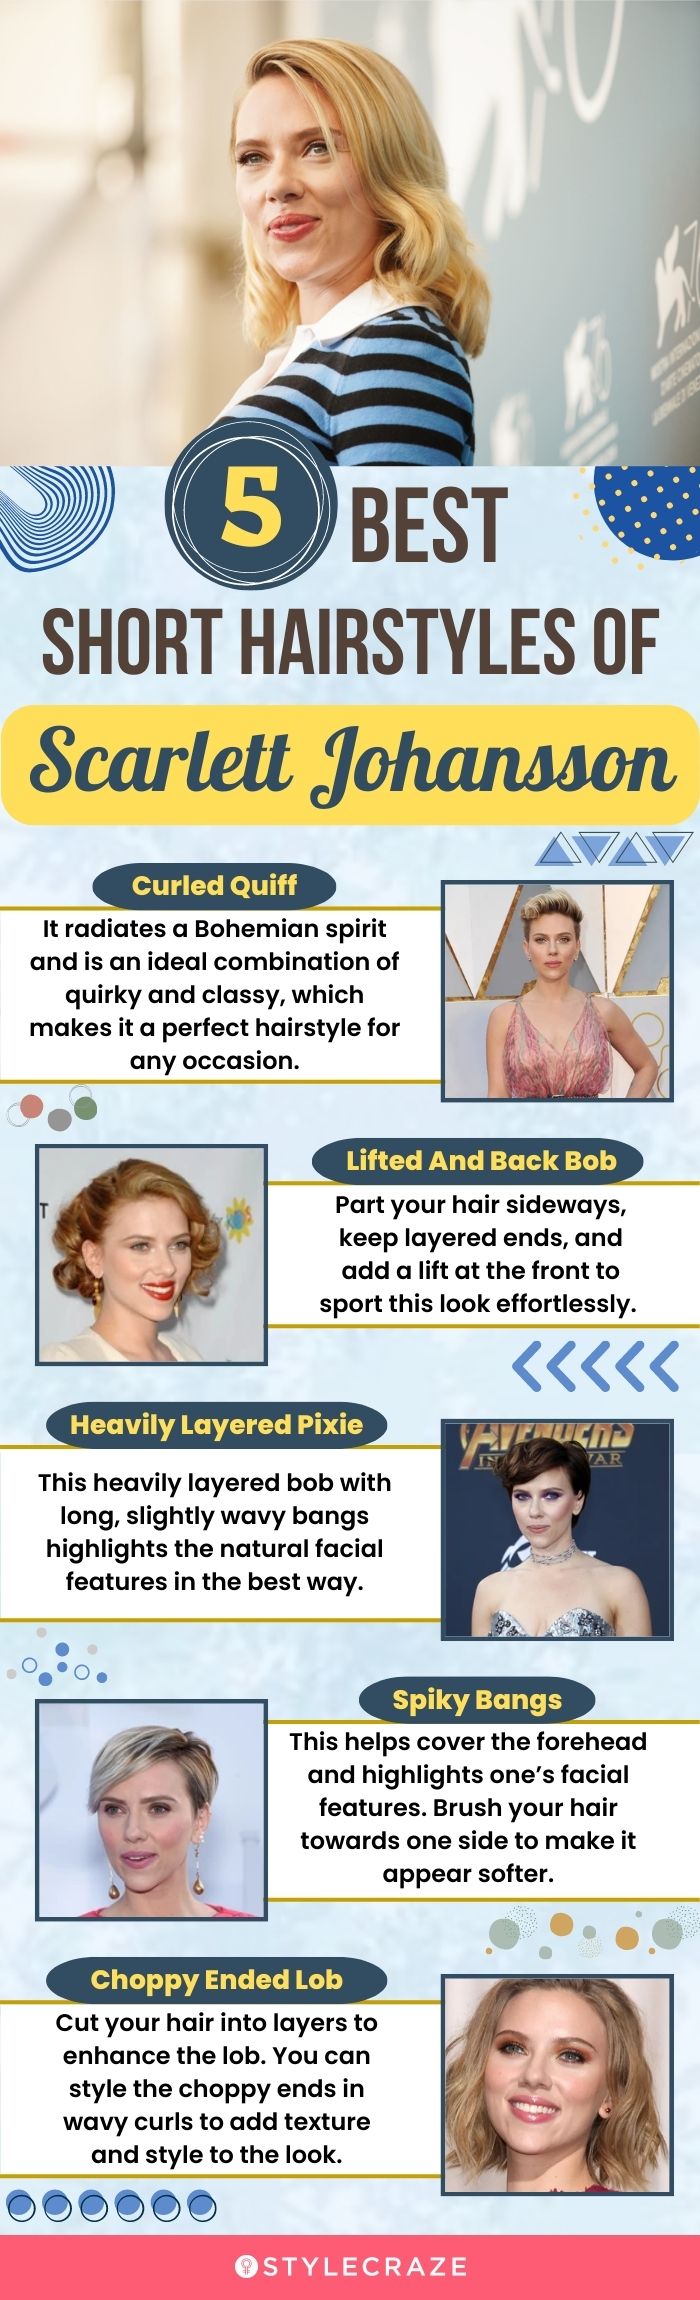 5 best short hairstyles of scarlett johansson (infographic)